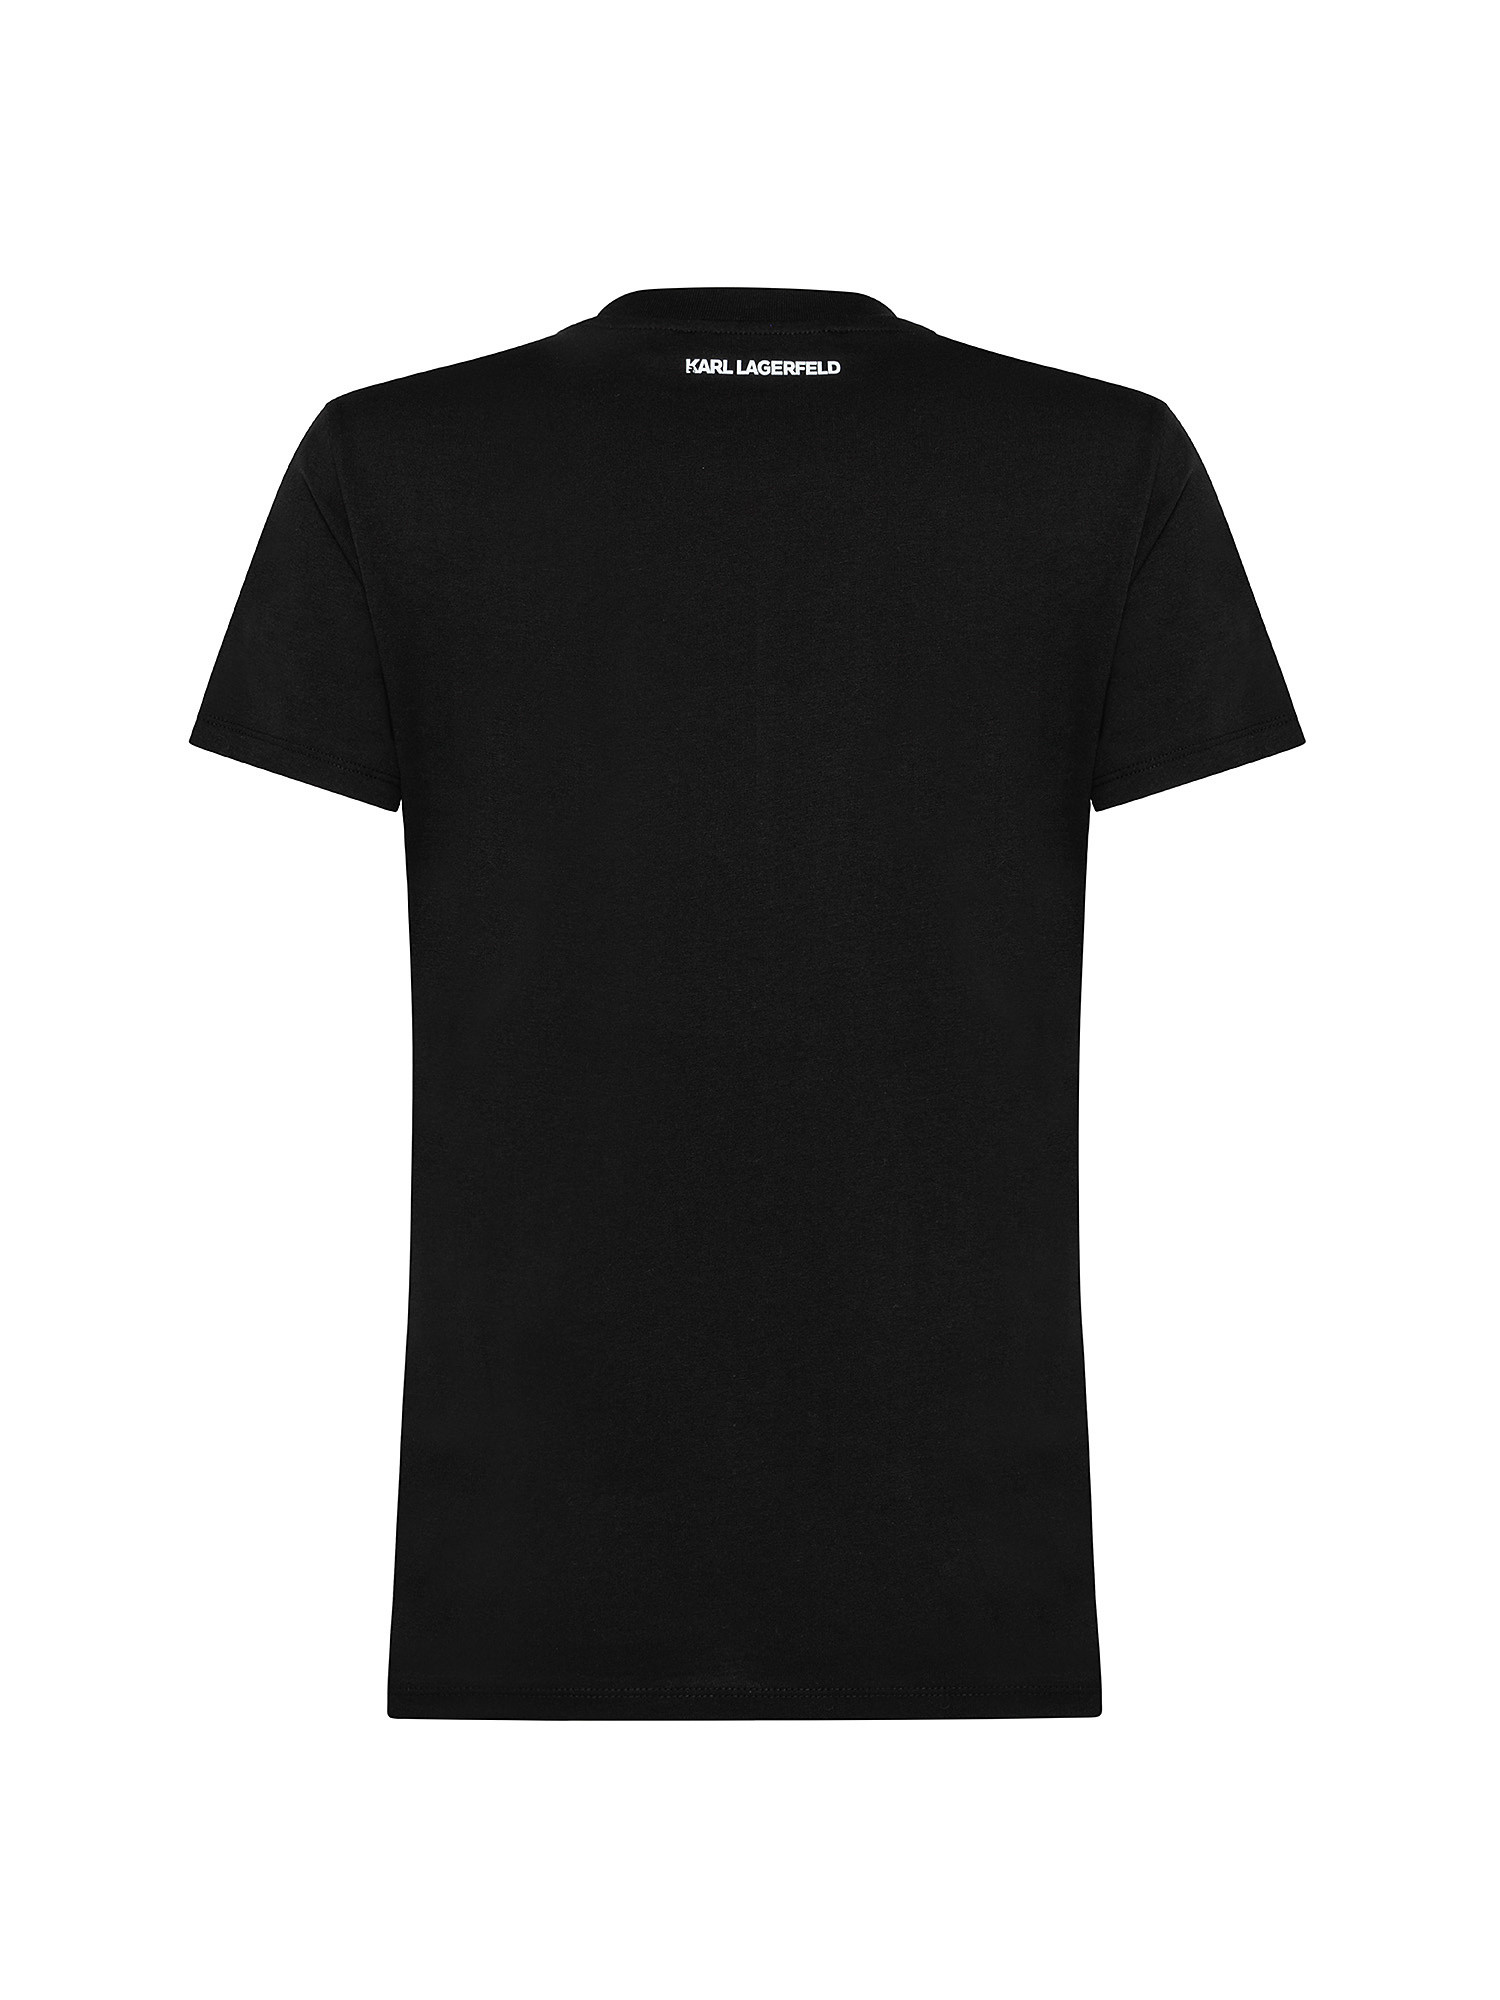 Ikonik Choupette Rs T-Shirt, Black, large image number 1